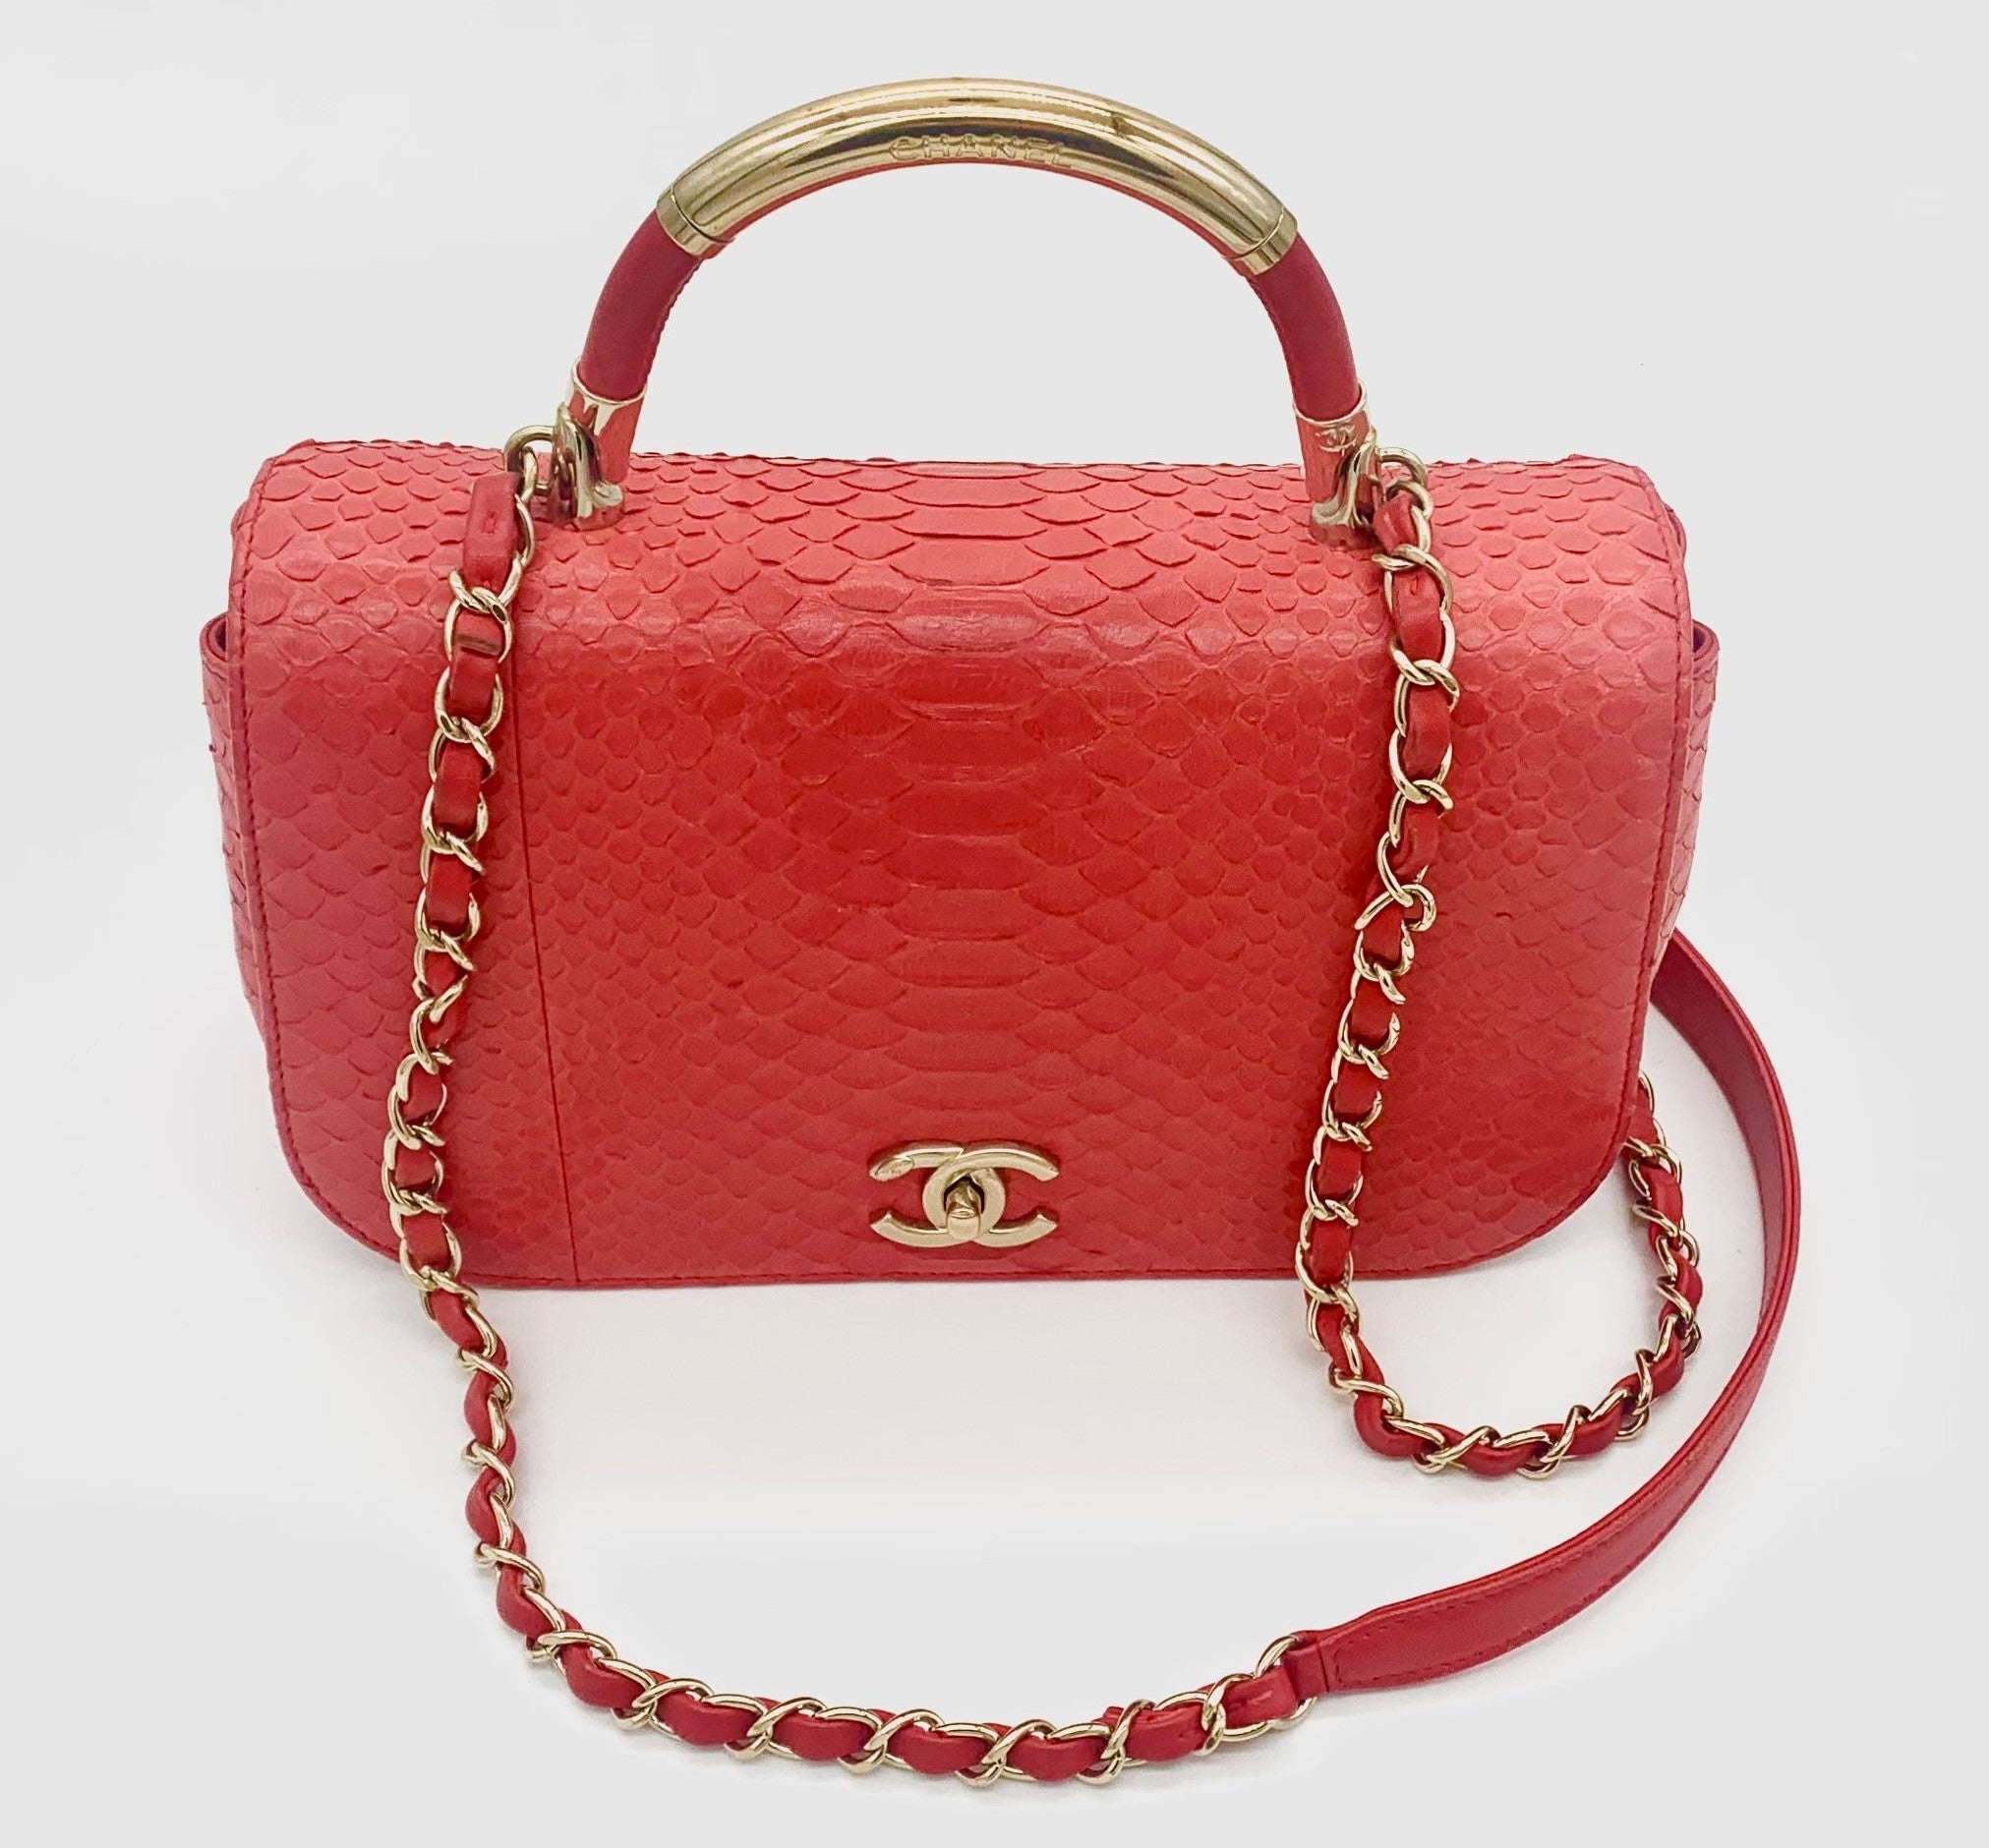 Chanel pre Shoulder Bag  CHANEL pre 2.55 Bags - StclaircomoShops